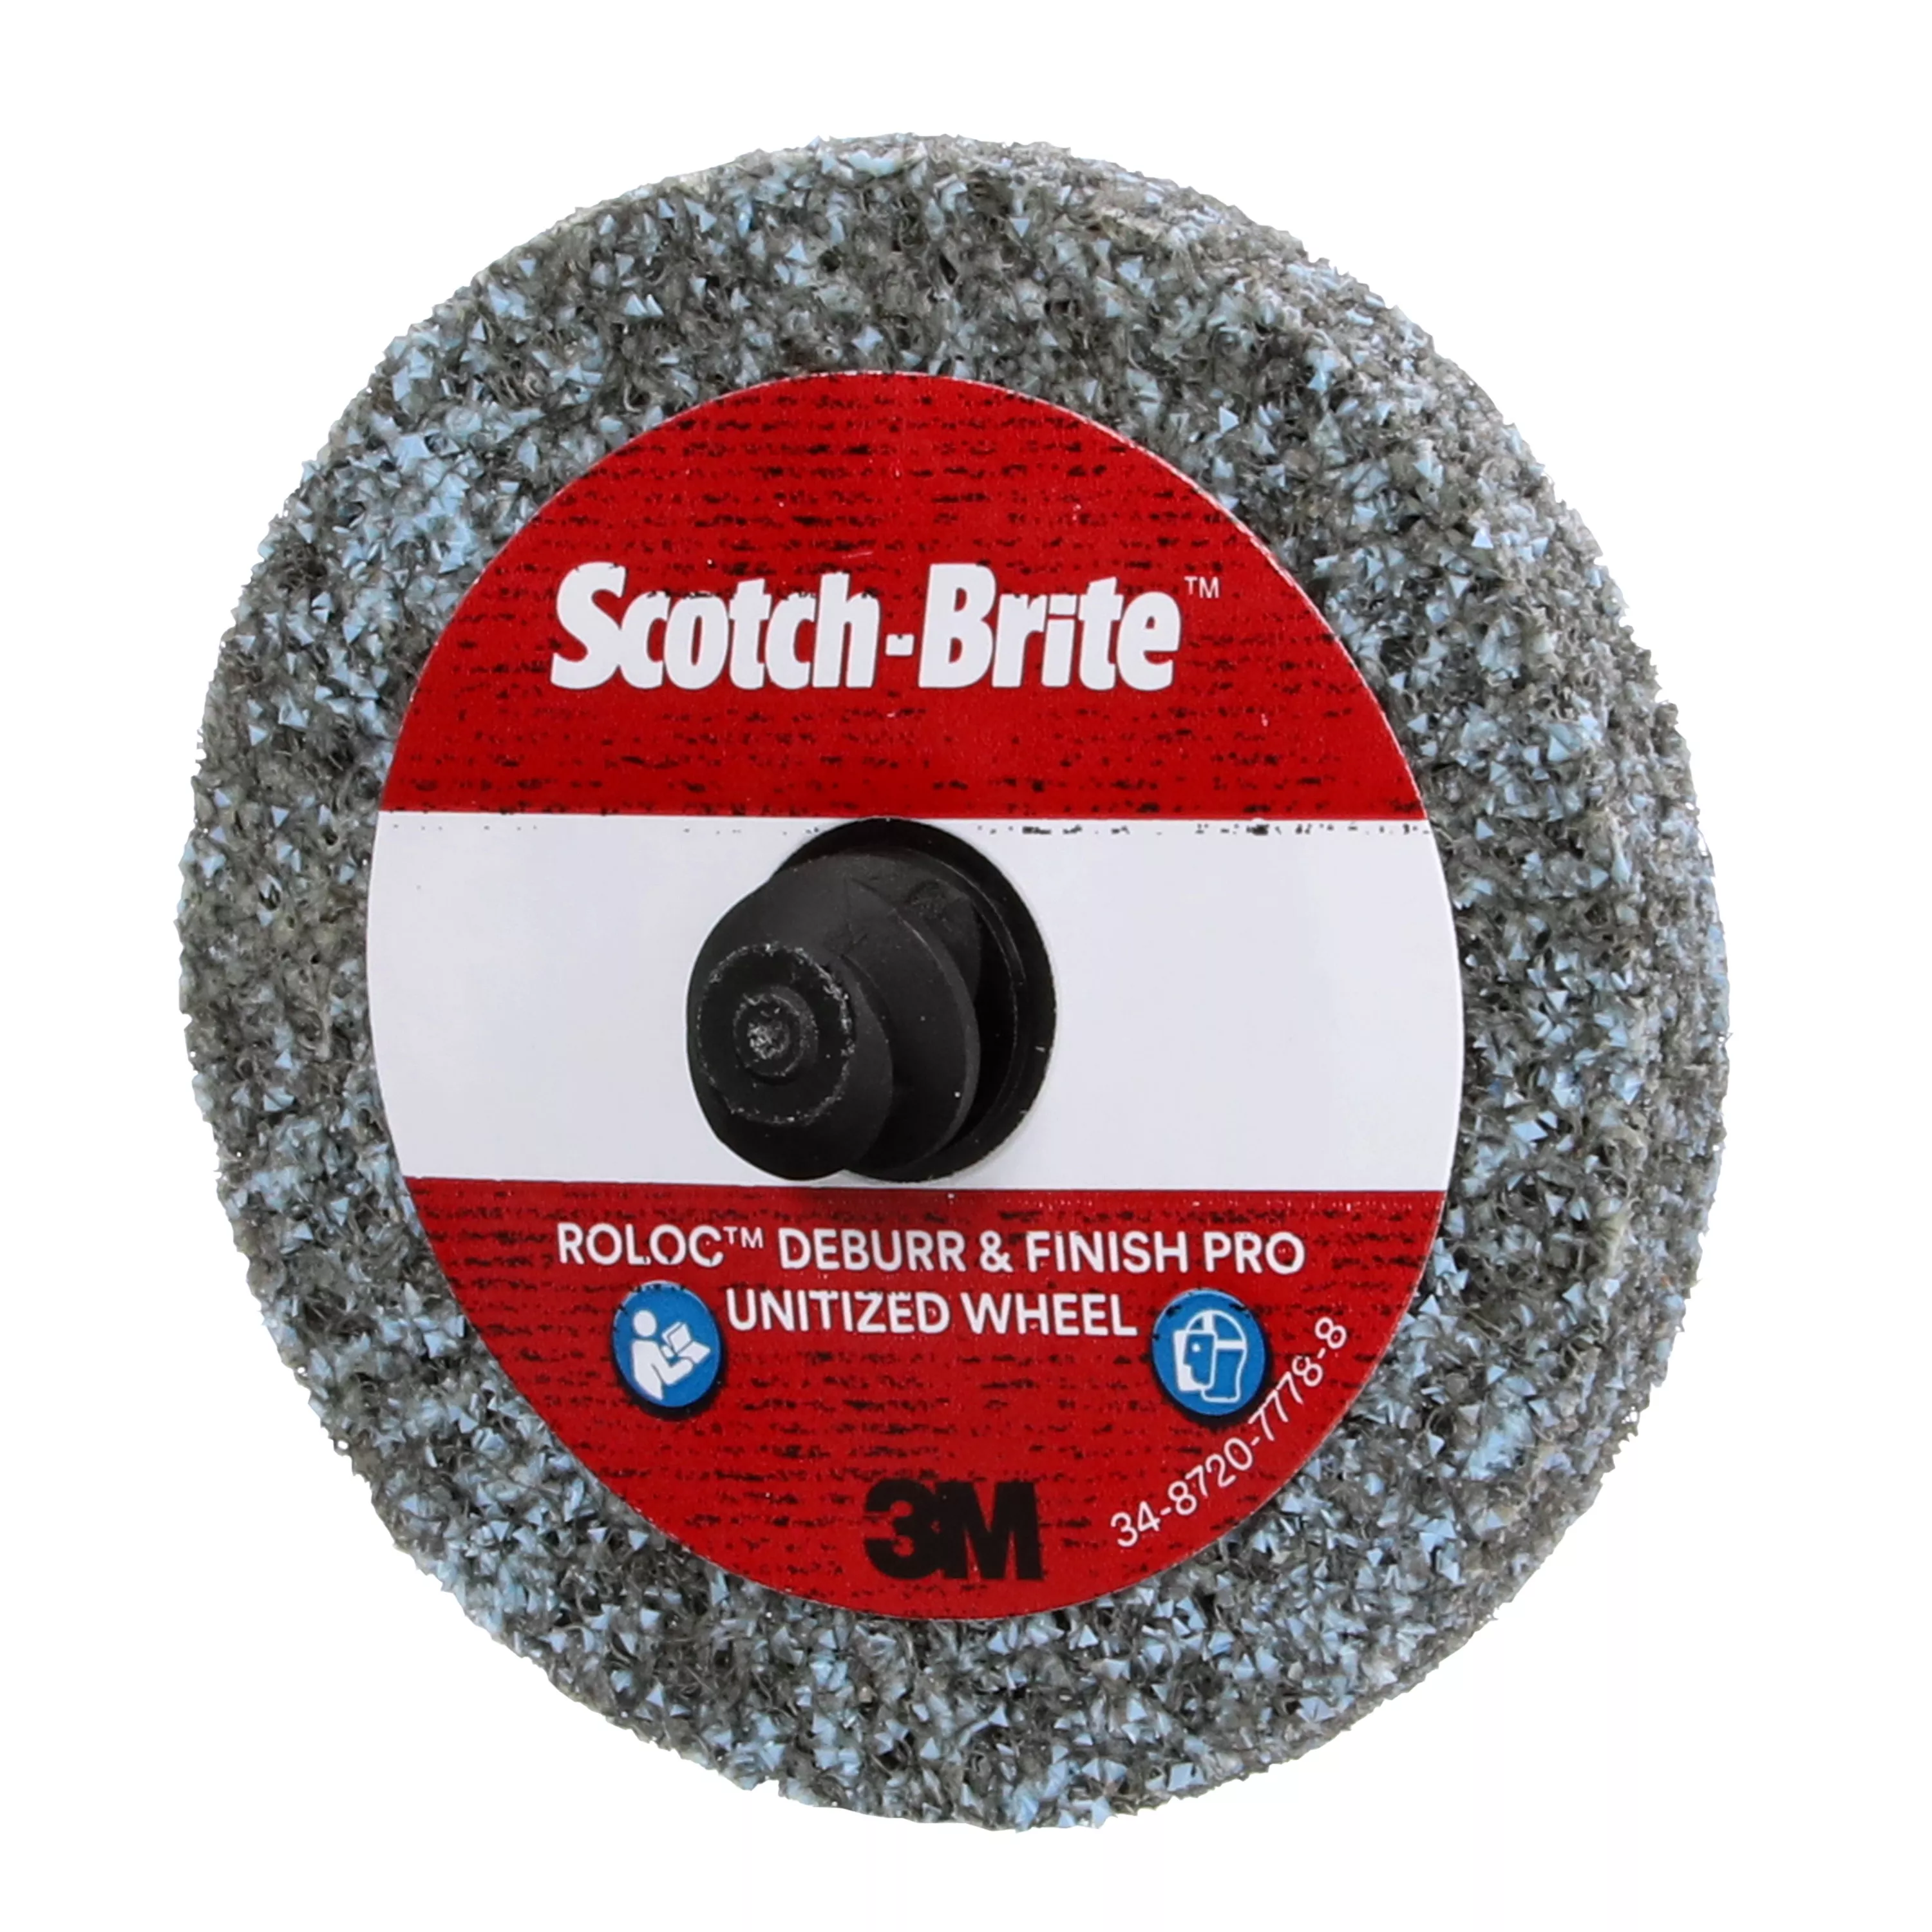 SKU 7100081367 | Scotch-Brite™ Roloc™ Deburr & Finish PRO Unitized Wheel